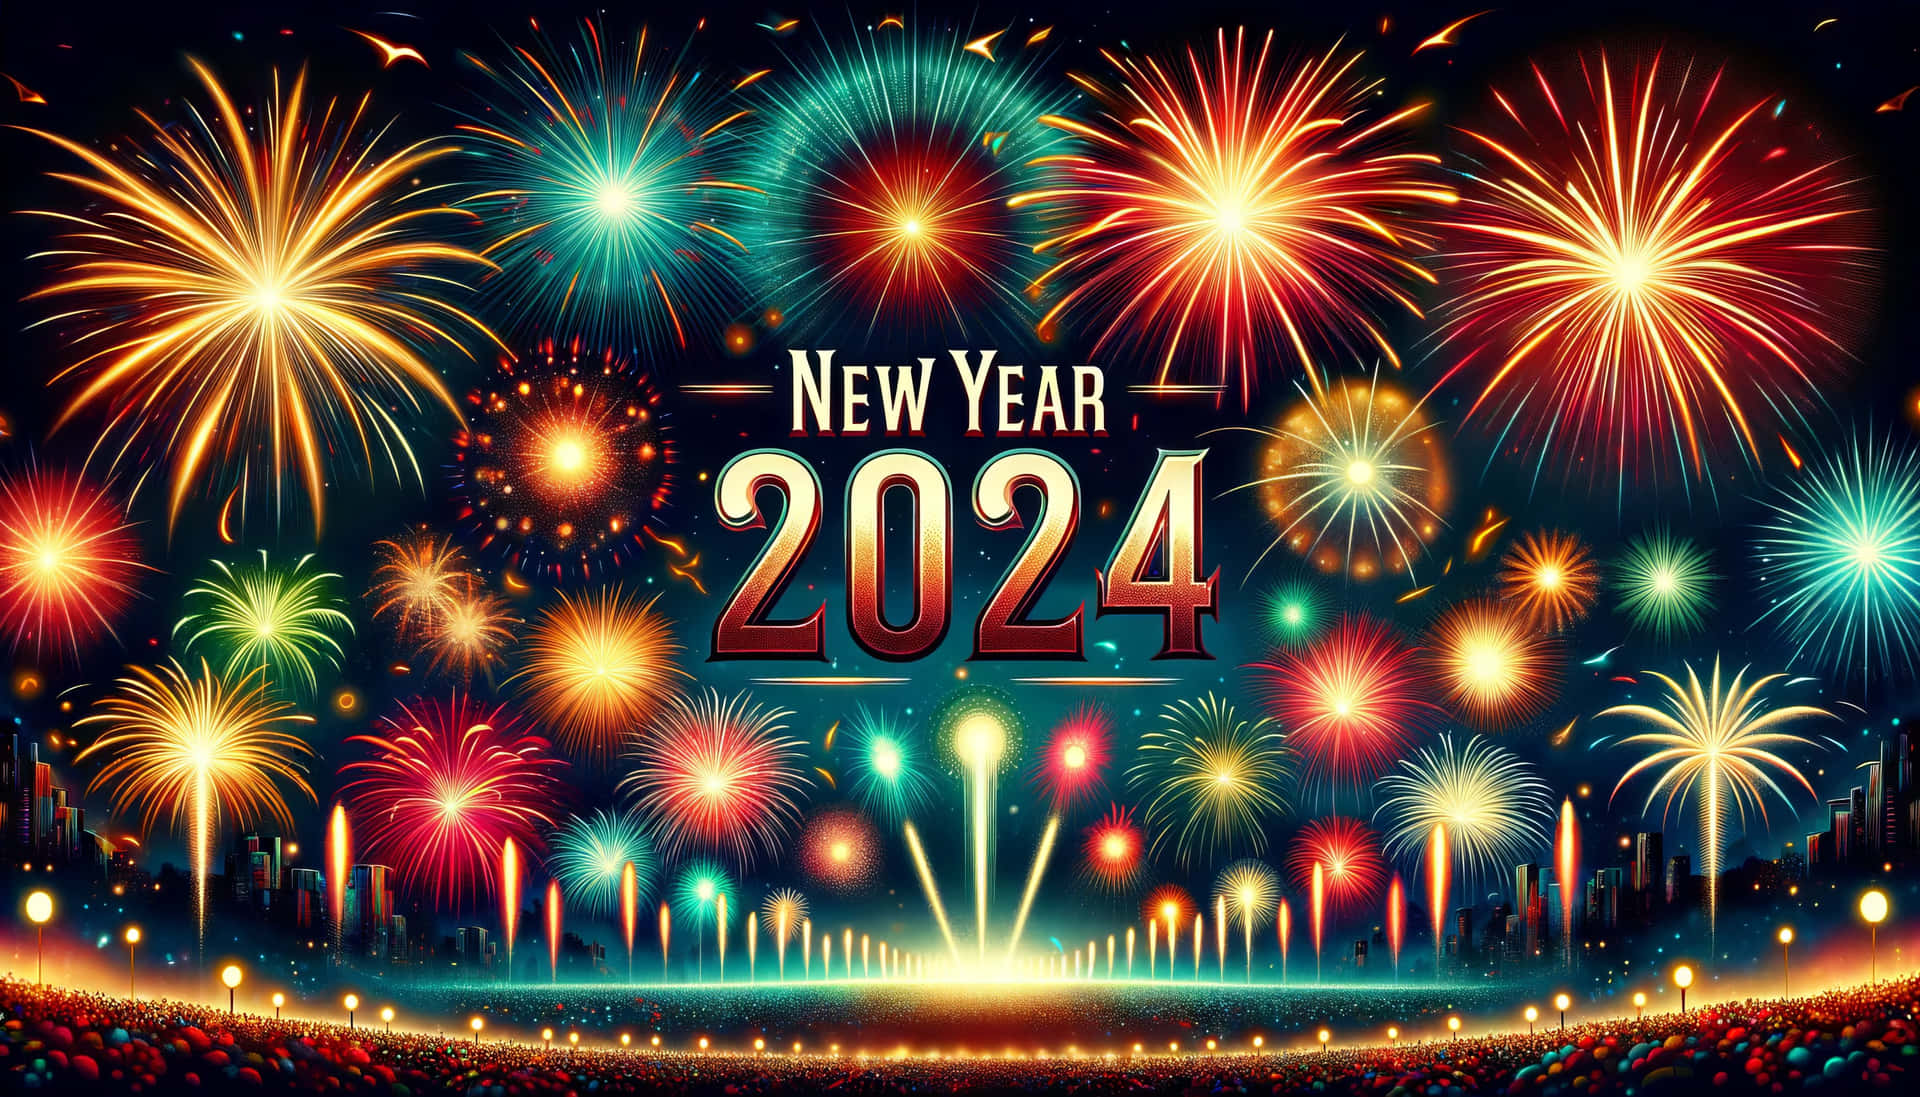 New Year2024 Fireworks Celebration Wallpaper